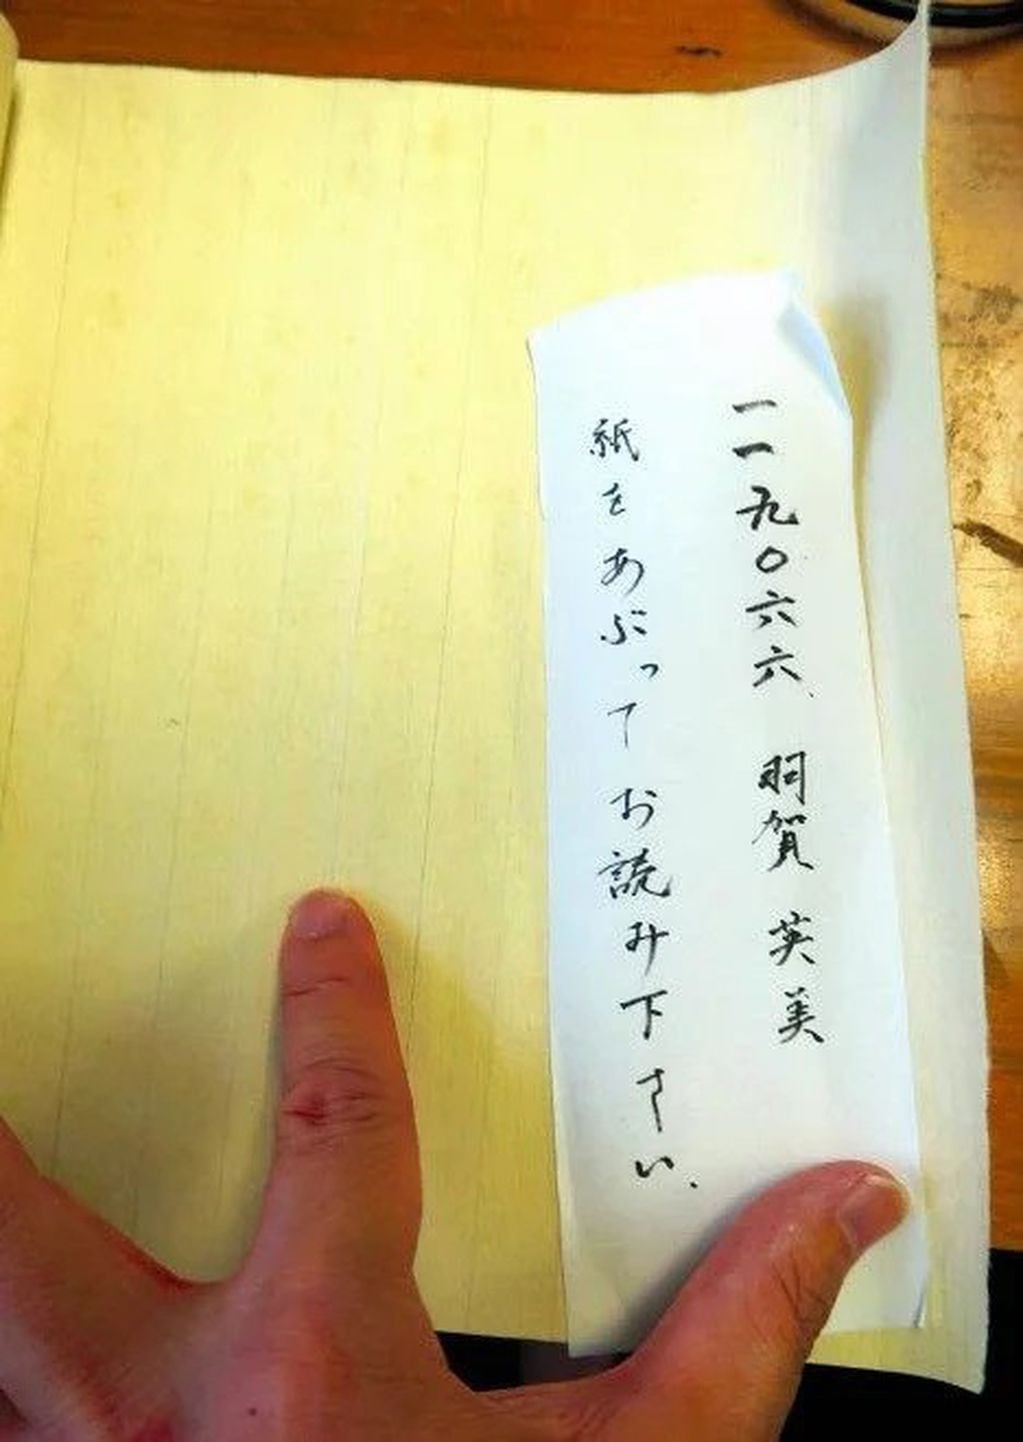 La hoja "en blanco" junto al mensaje en tinta común pidiendo "calentar la hoja" (Foto: Asashi.com).